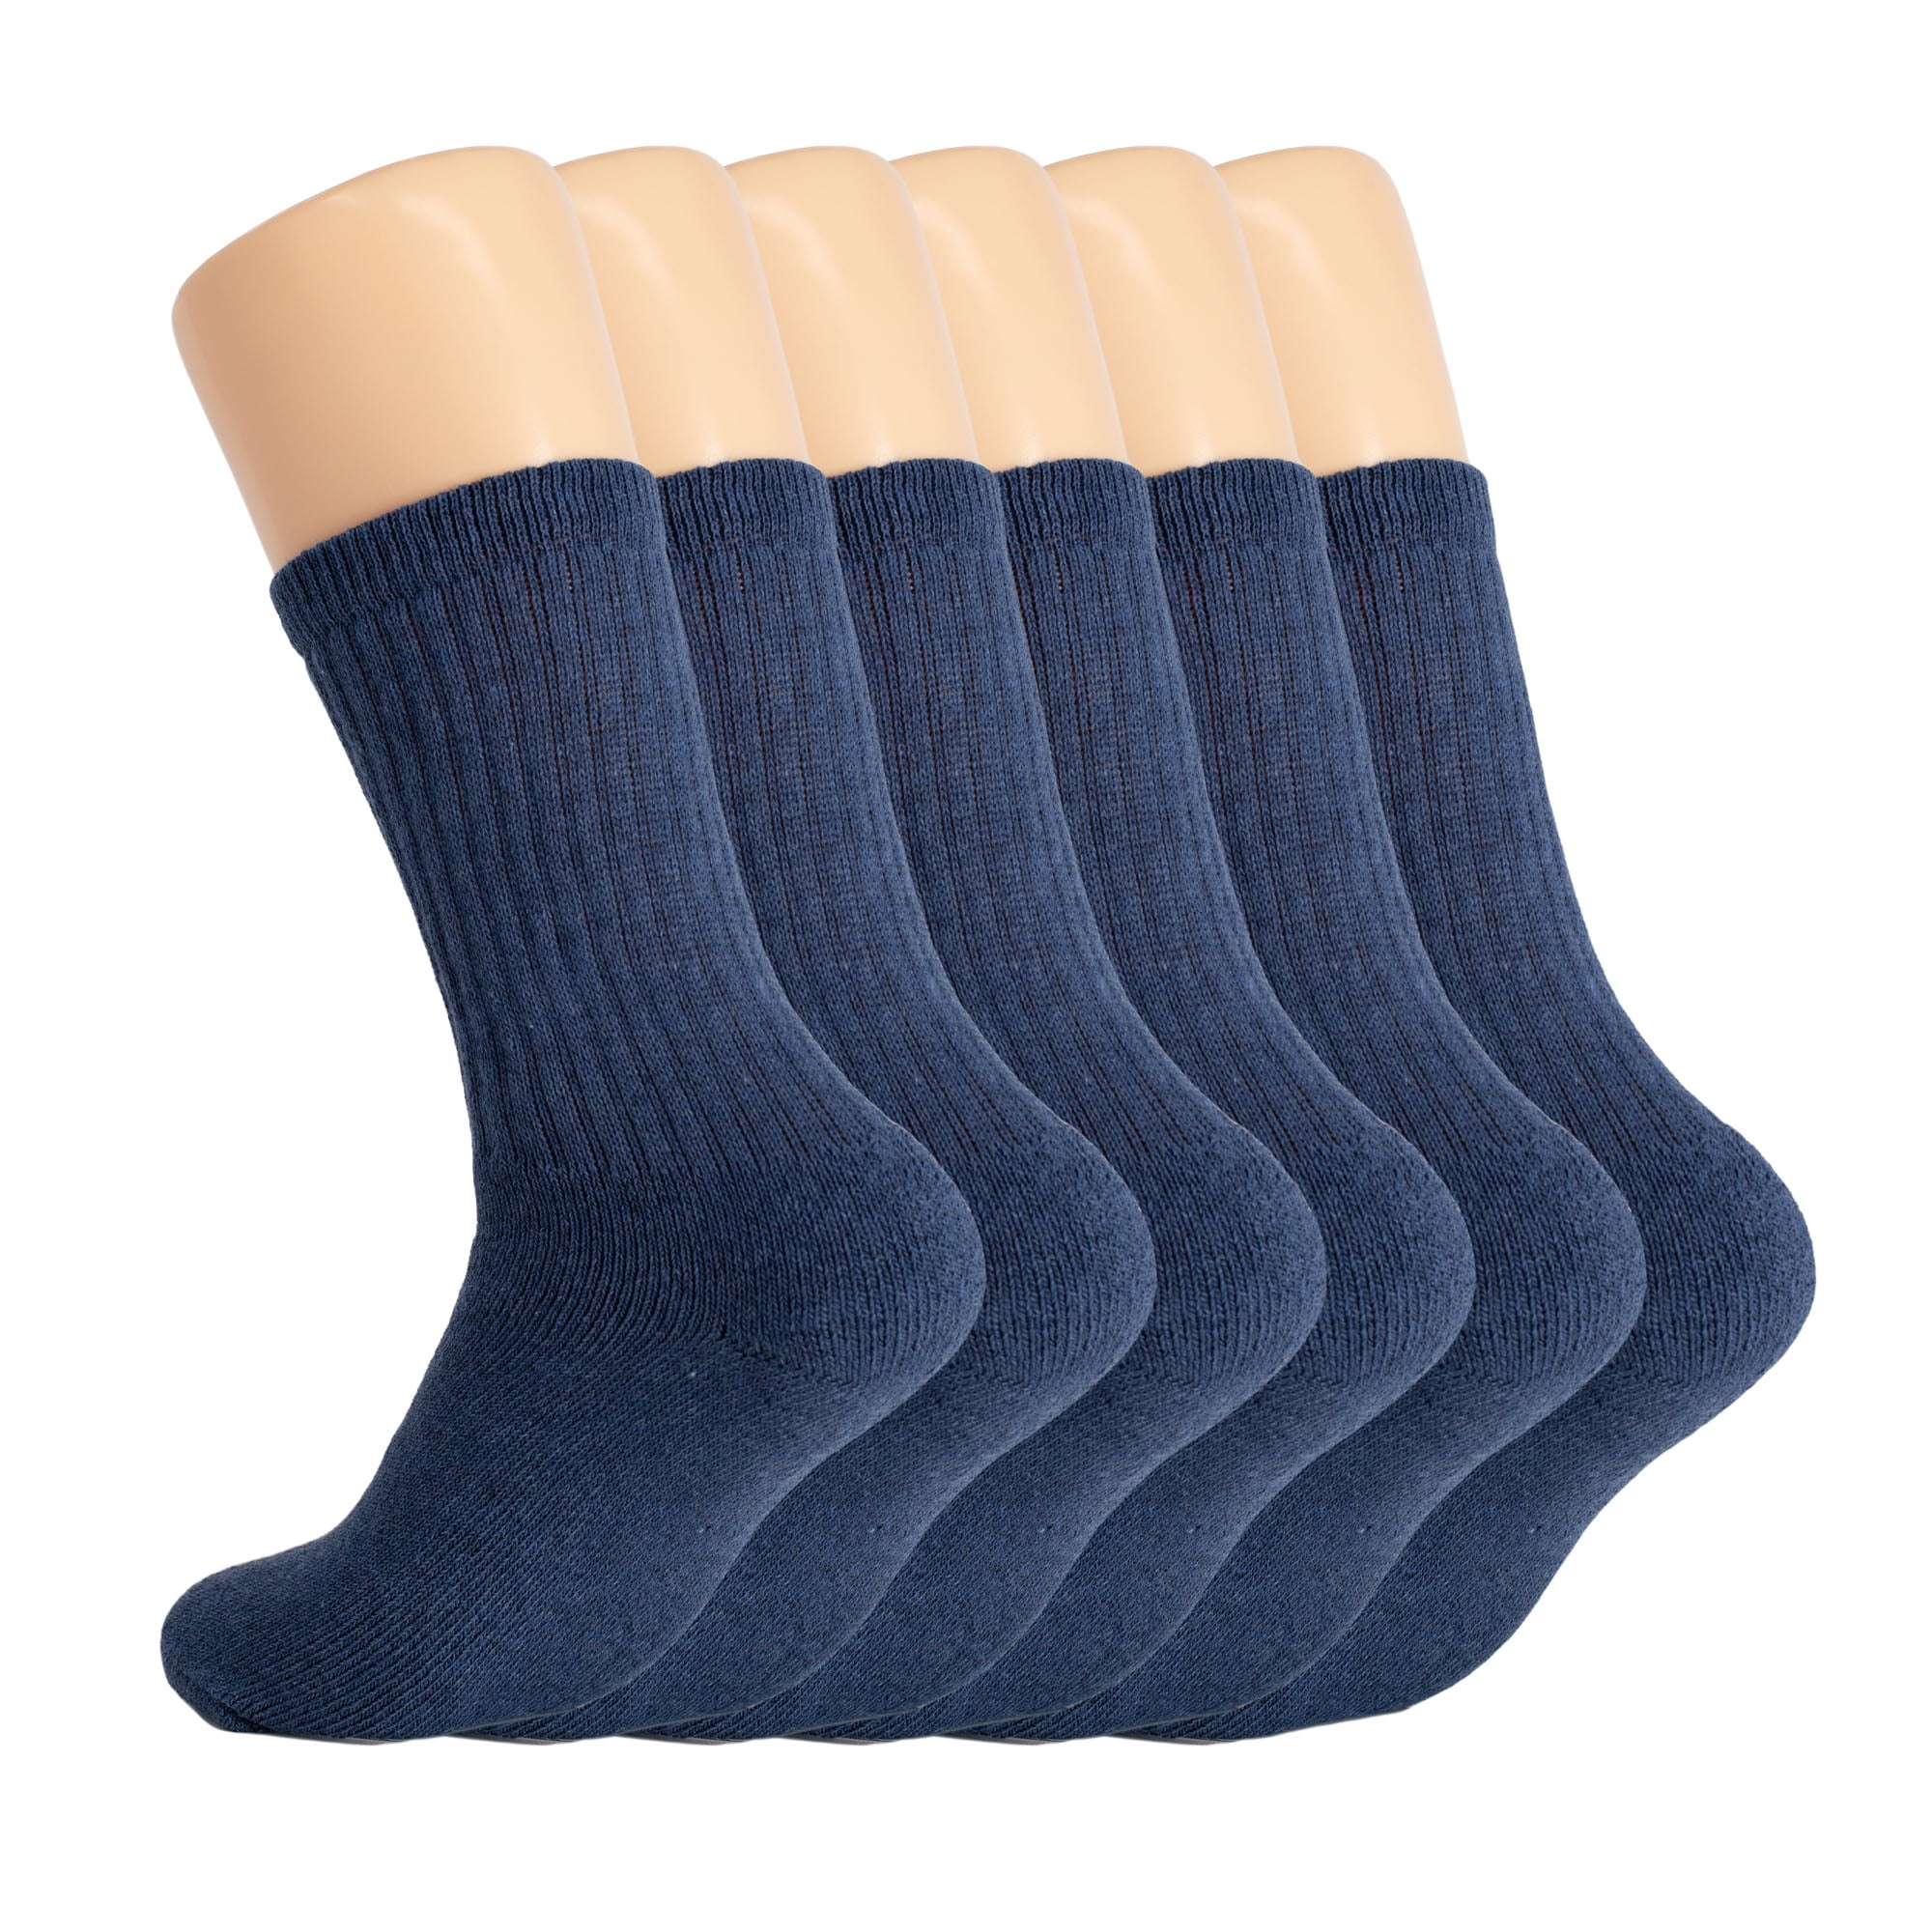 Cotton Crew Socks for Women Indigo Blue 6 Pairs Size 9-11 - Walmart.com